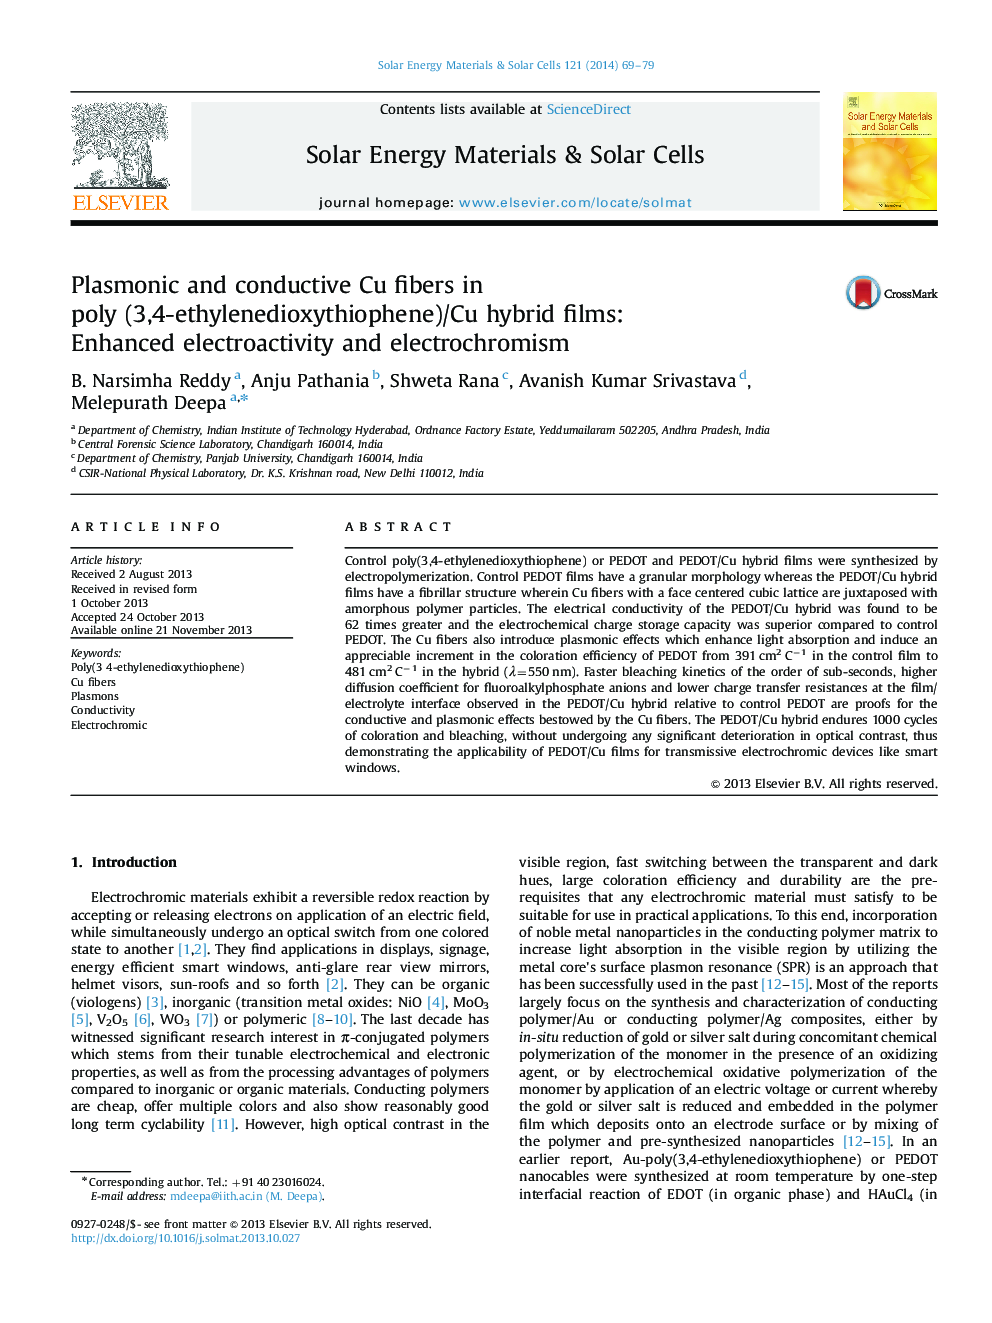 Plasmonic and conductive Cu fibers in poly (3,4-ethylenedioxythiophene)/Cu hybrid films: Enhanced electroactivity and electrochromism